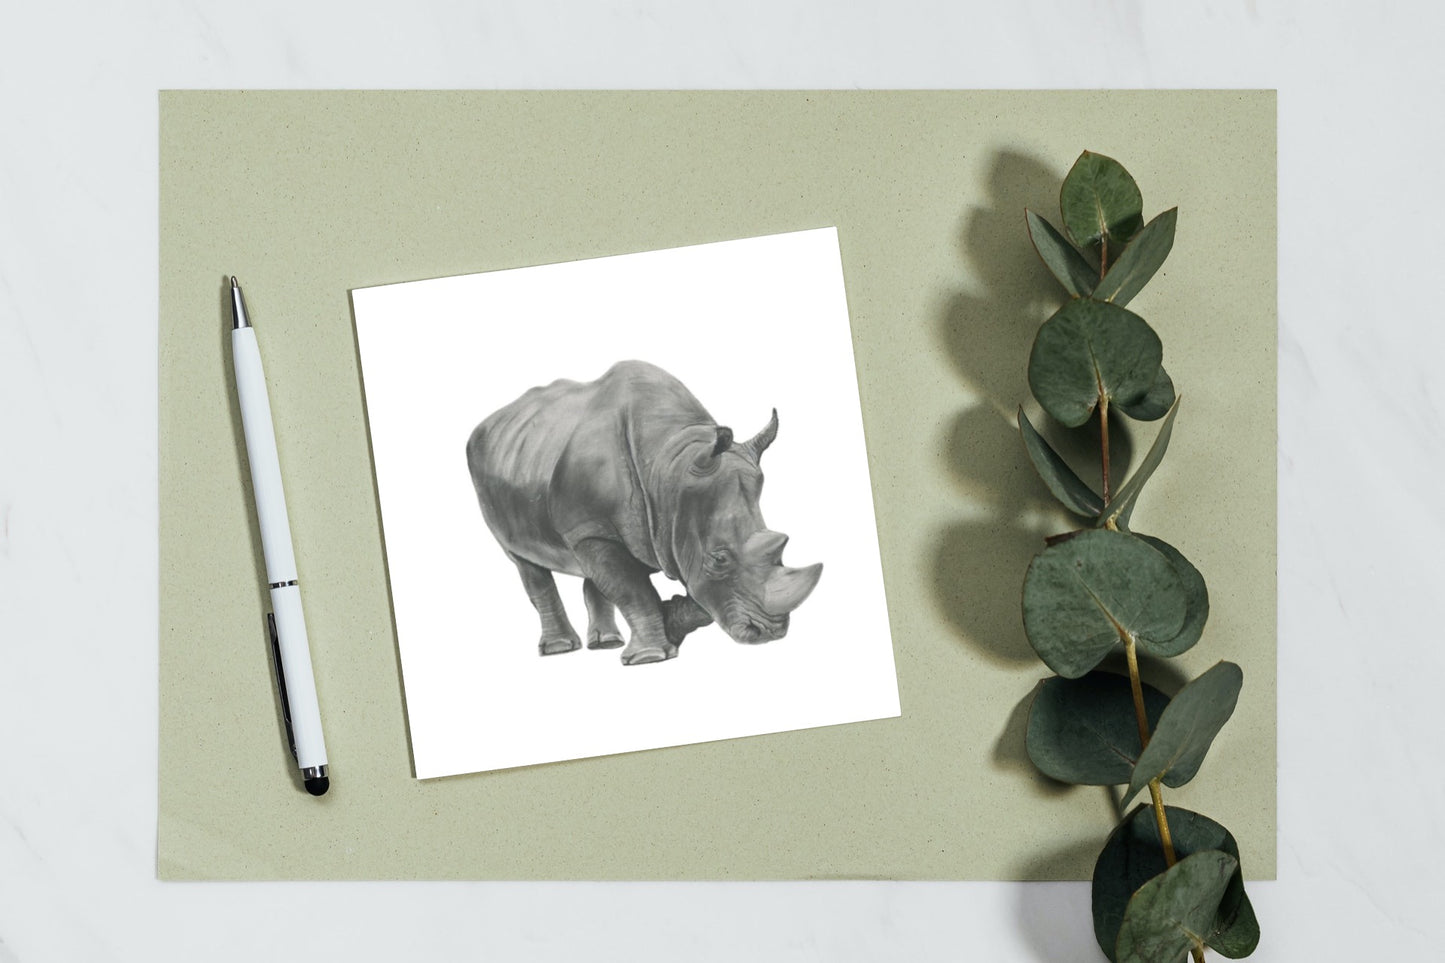 A Hand Drawn Rhino Greeting Card From Libra Fine Arts